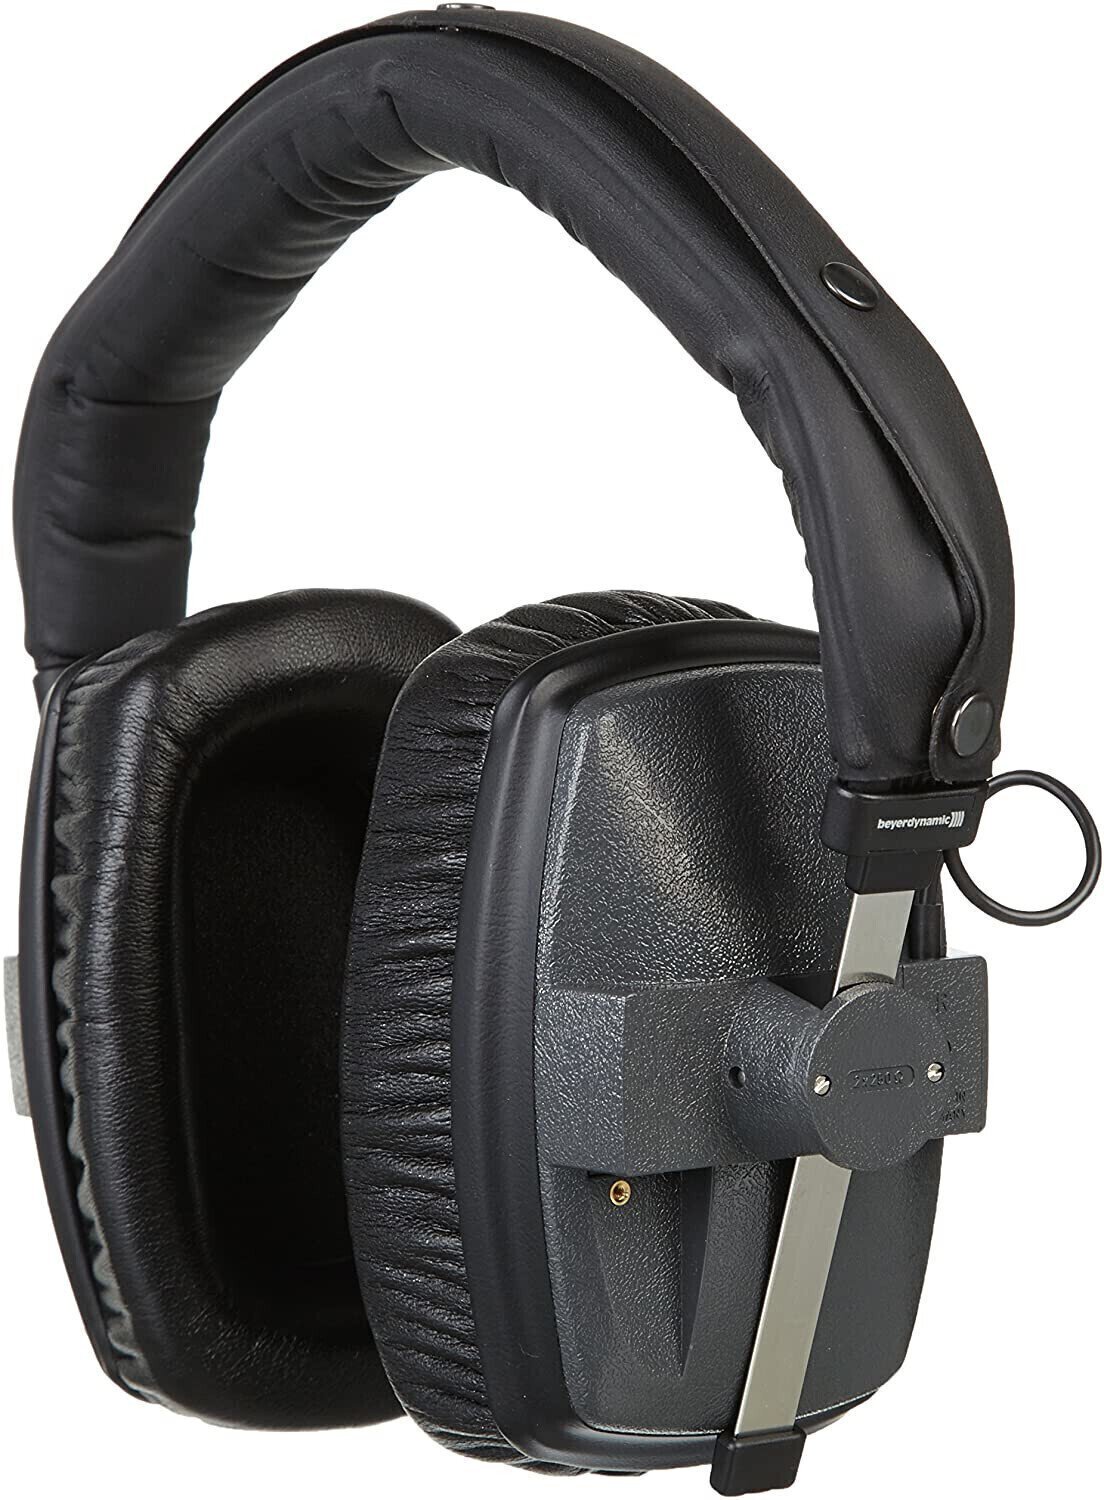 Studio Headphones Beyerdynamic DT 150 250 Ohm